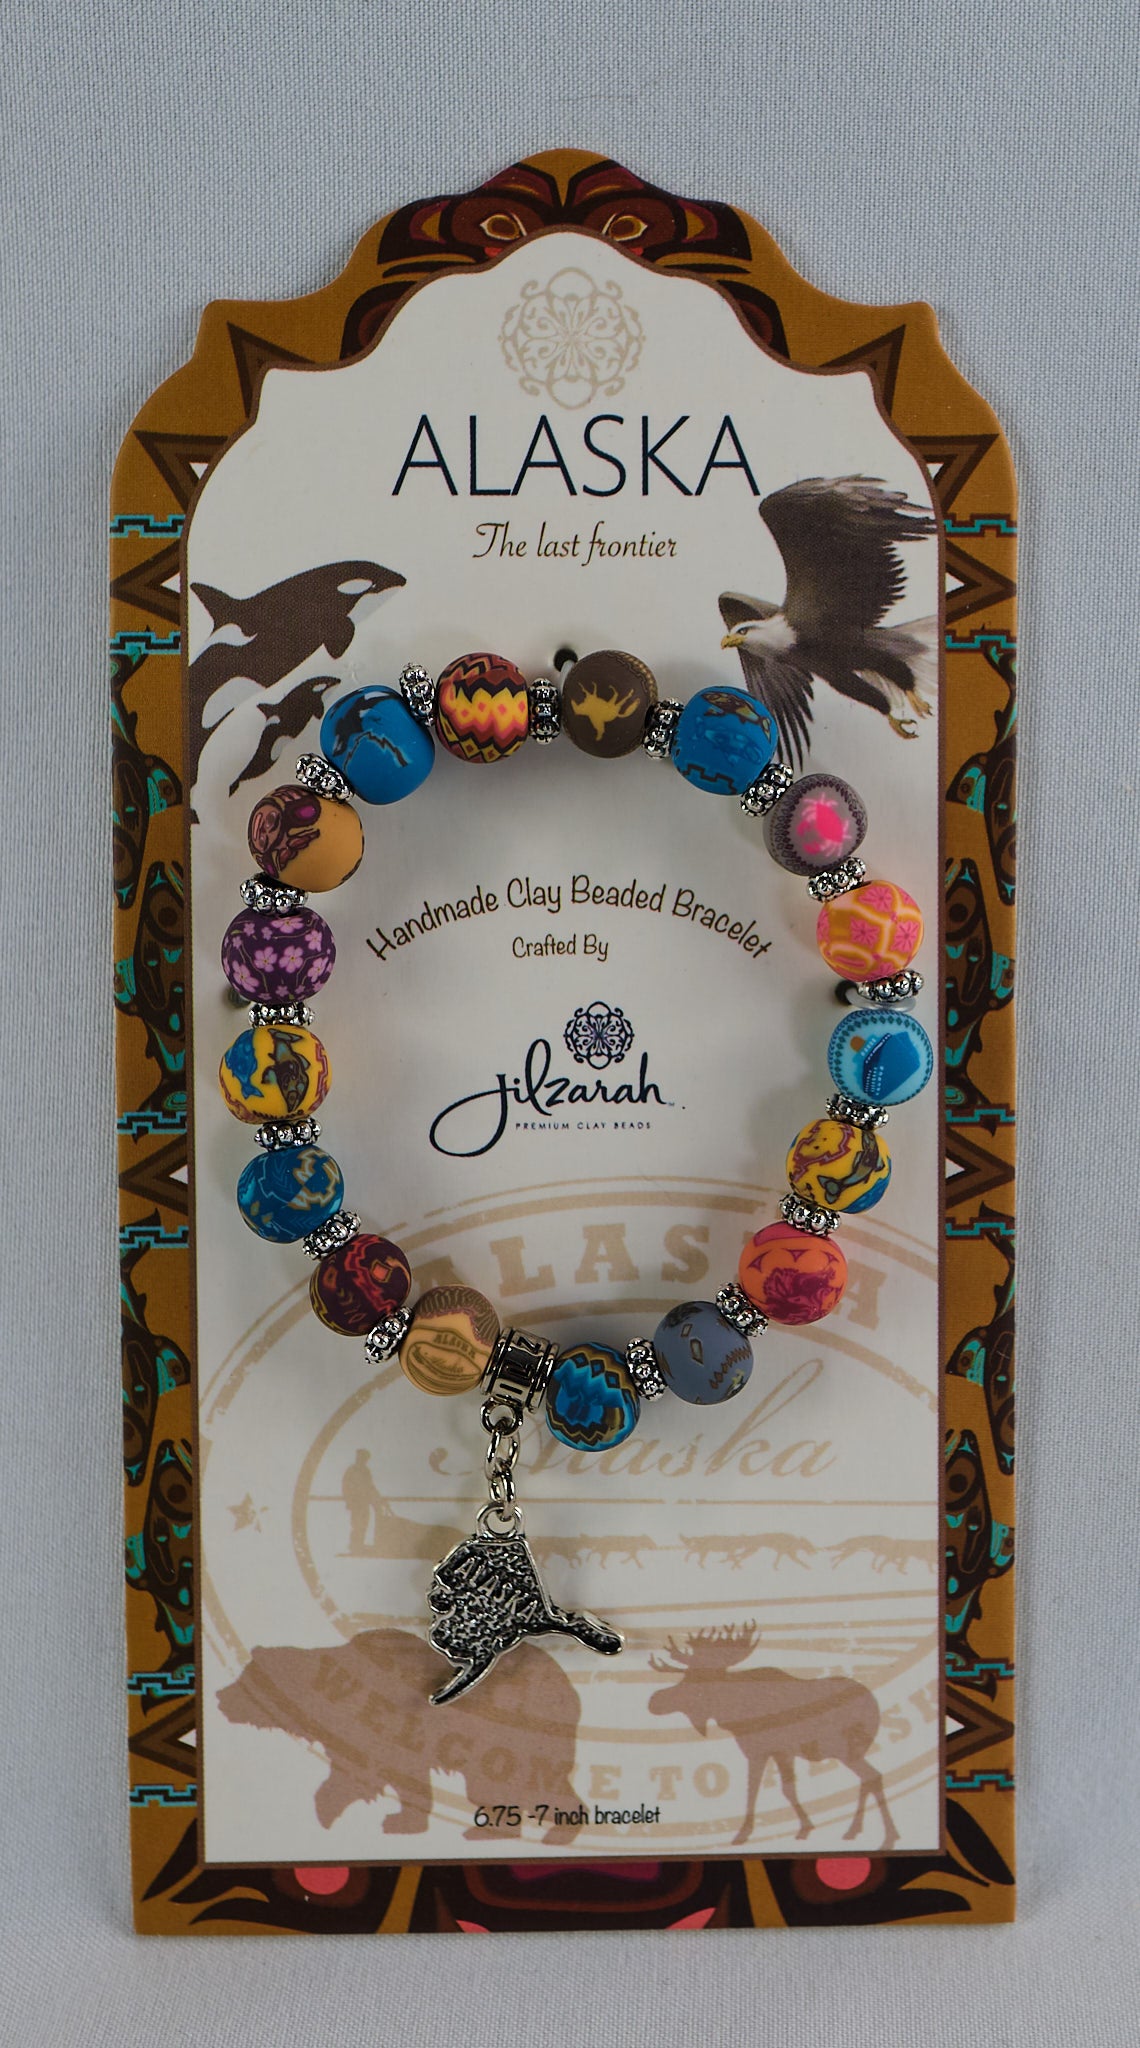 Alaska Handmade Clay Beaded Bracelet